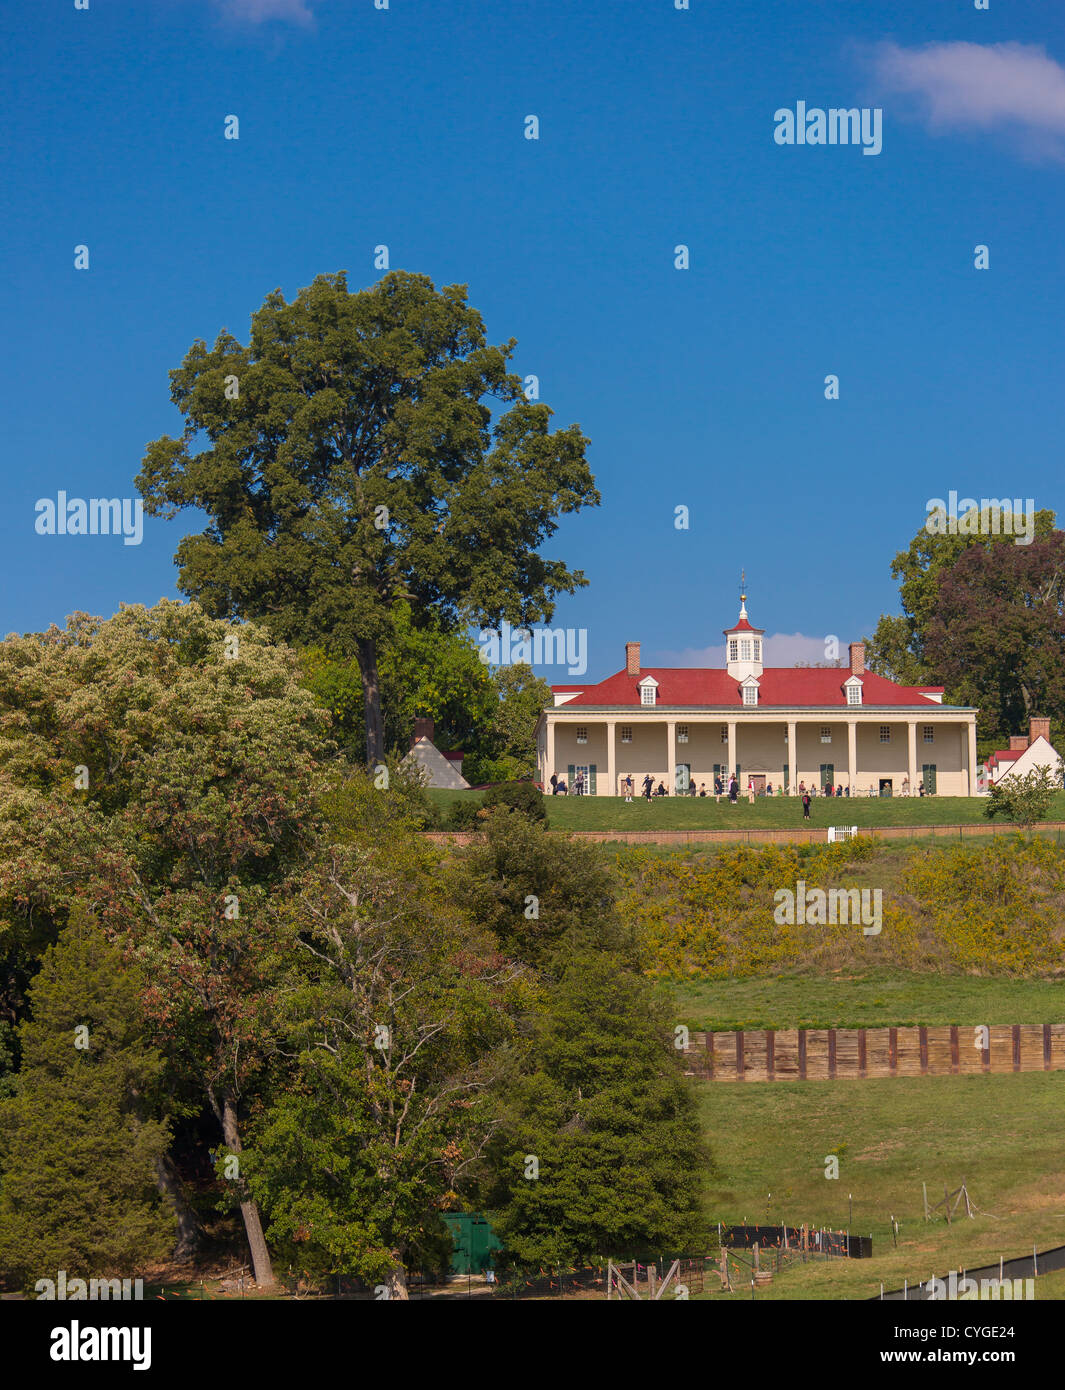 MOUNT VERNON, VIRGINIA, USA - Pecan tree (top left) at historic home of George Washington, first President of USA. Stock Photo